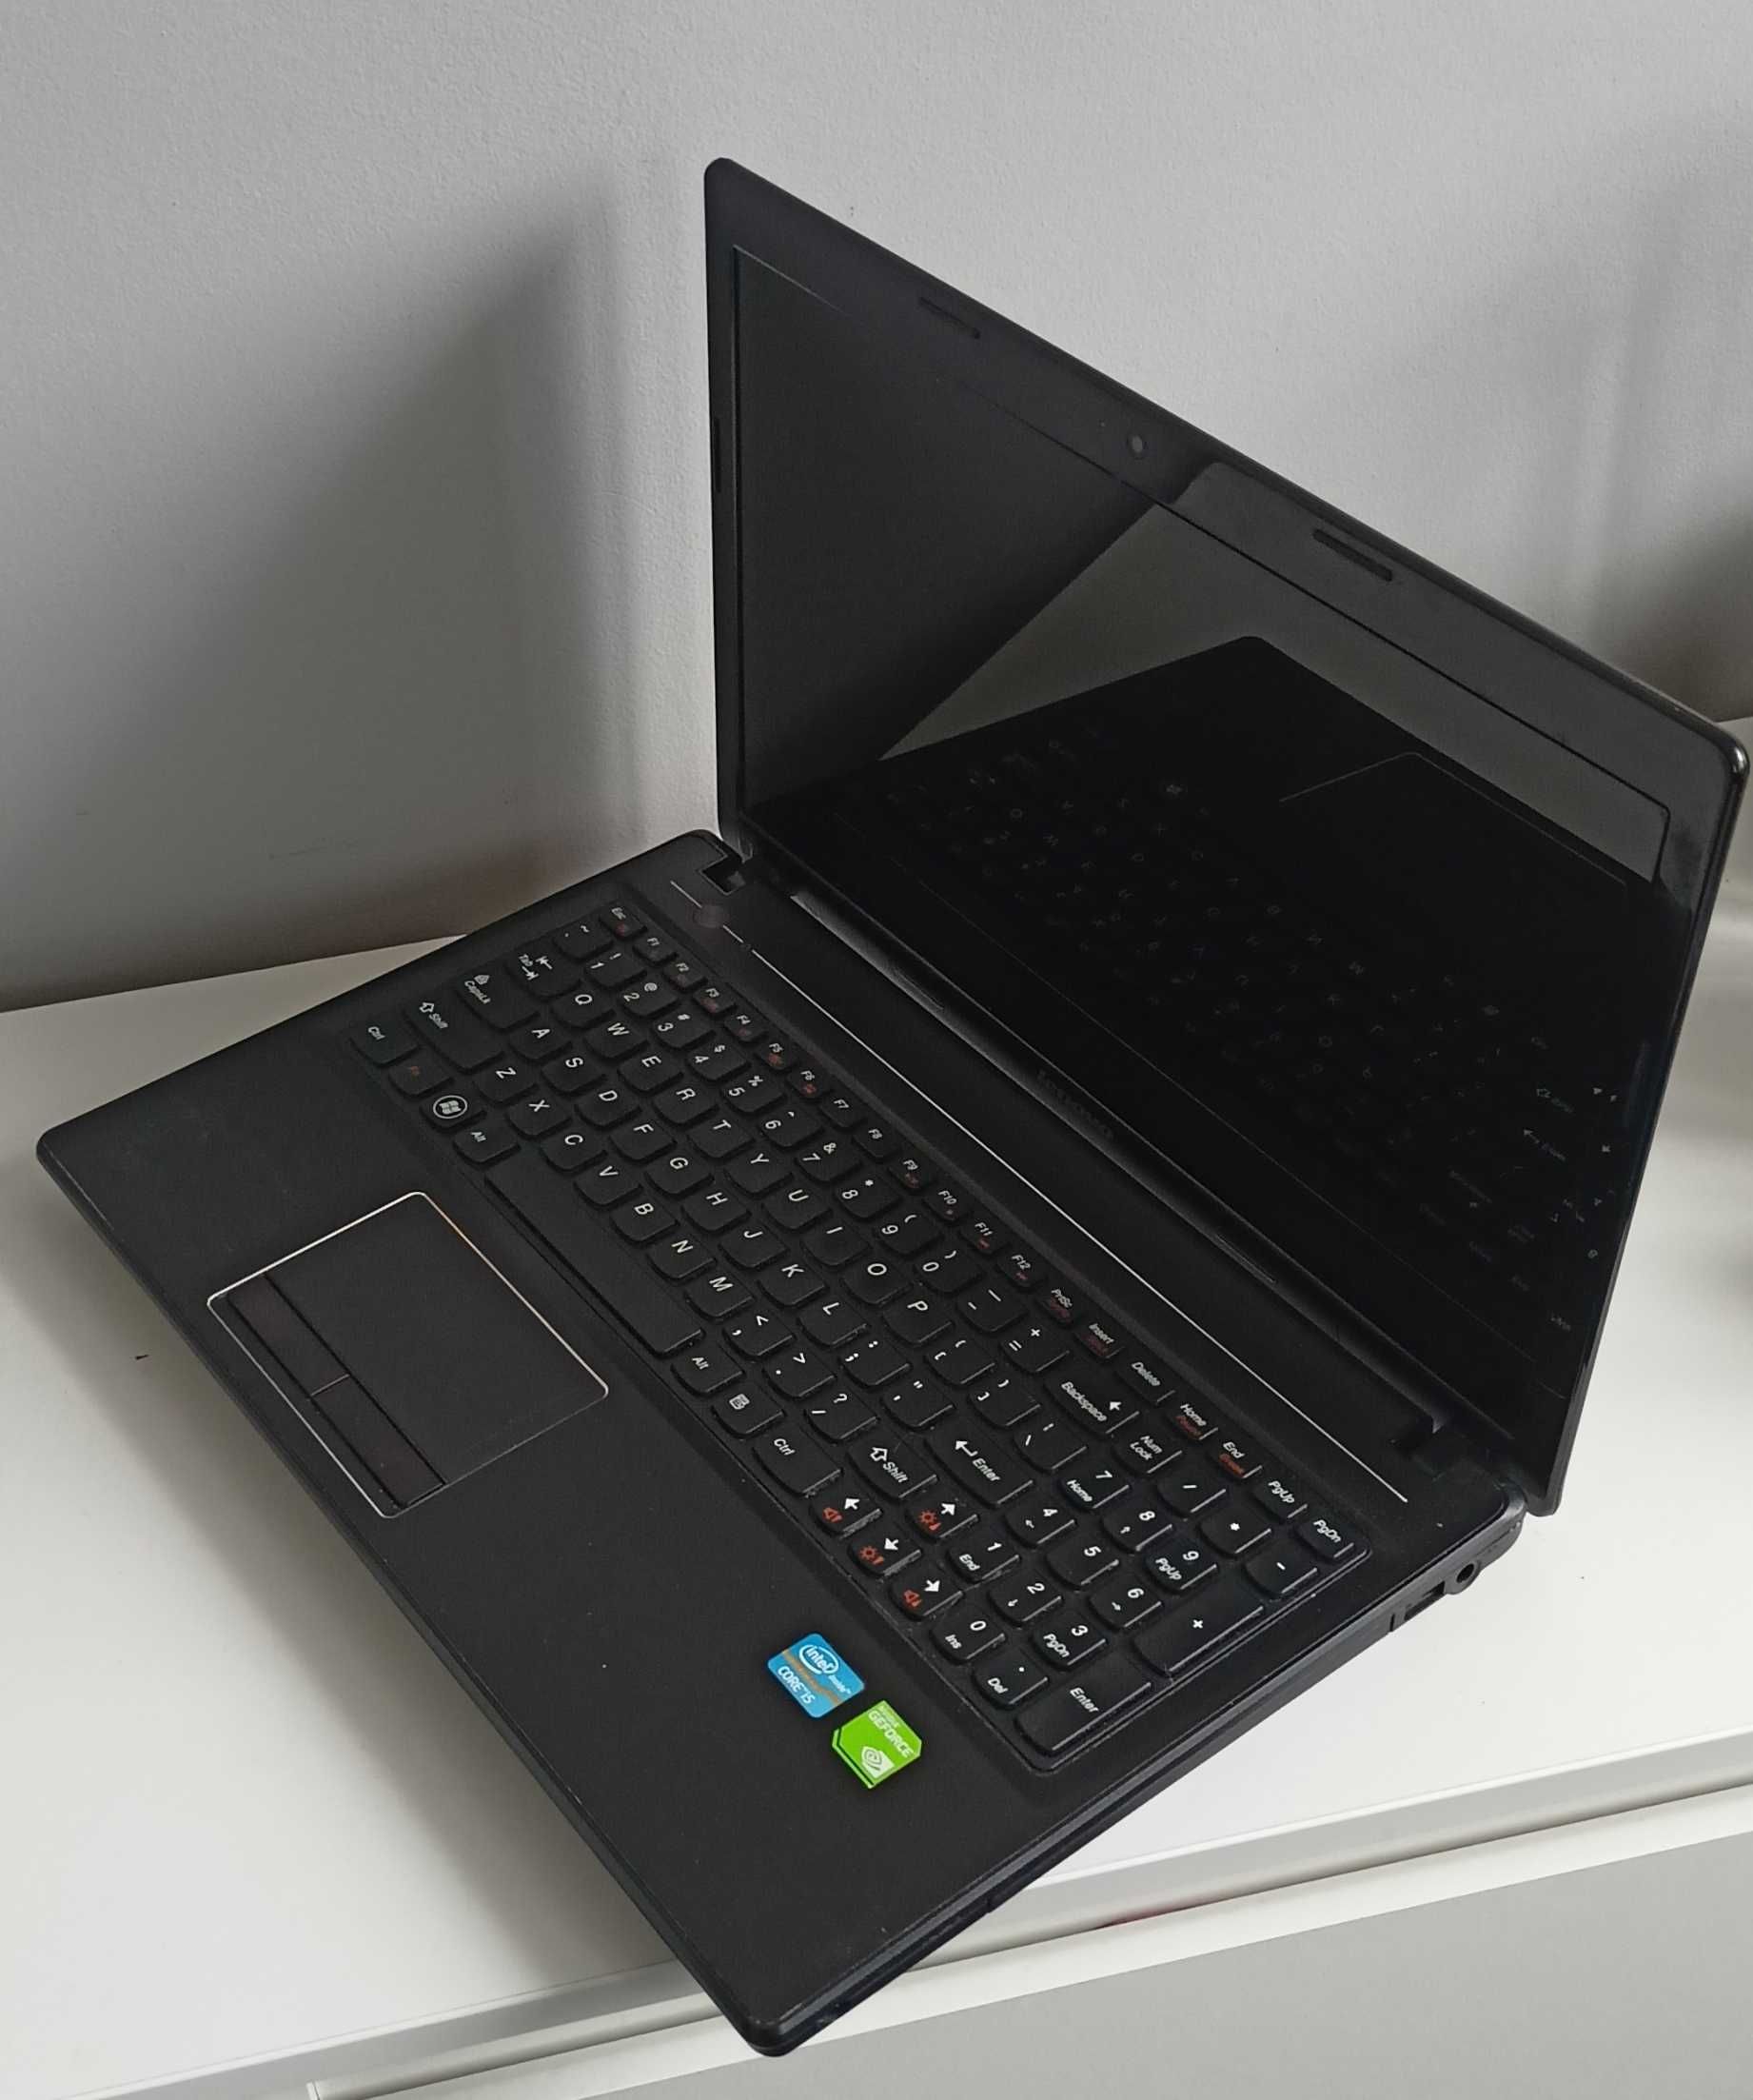 Laptop Lenovo G580 z modyfikacjami komputer 120GB SSD Linux